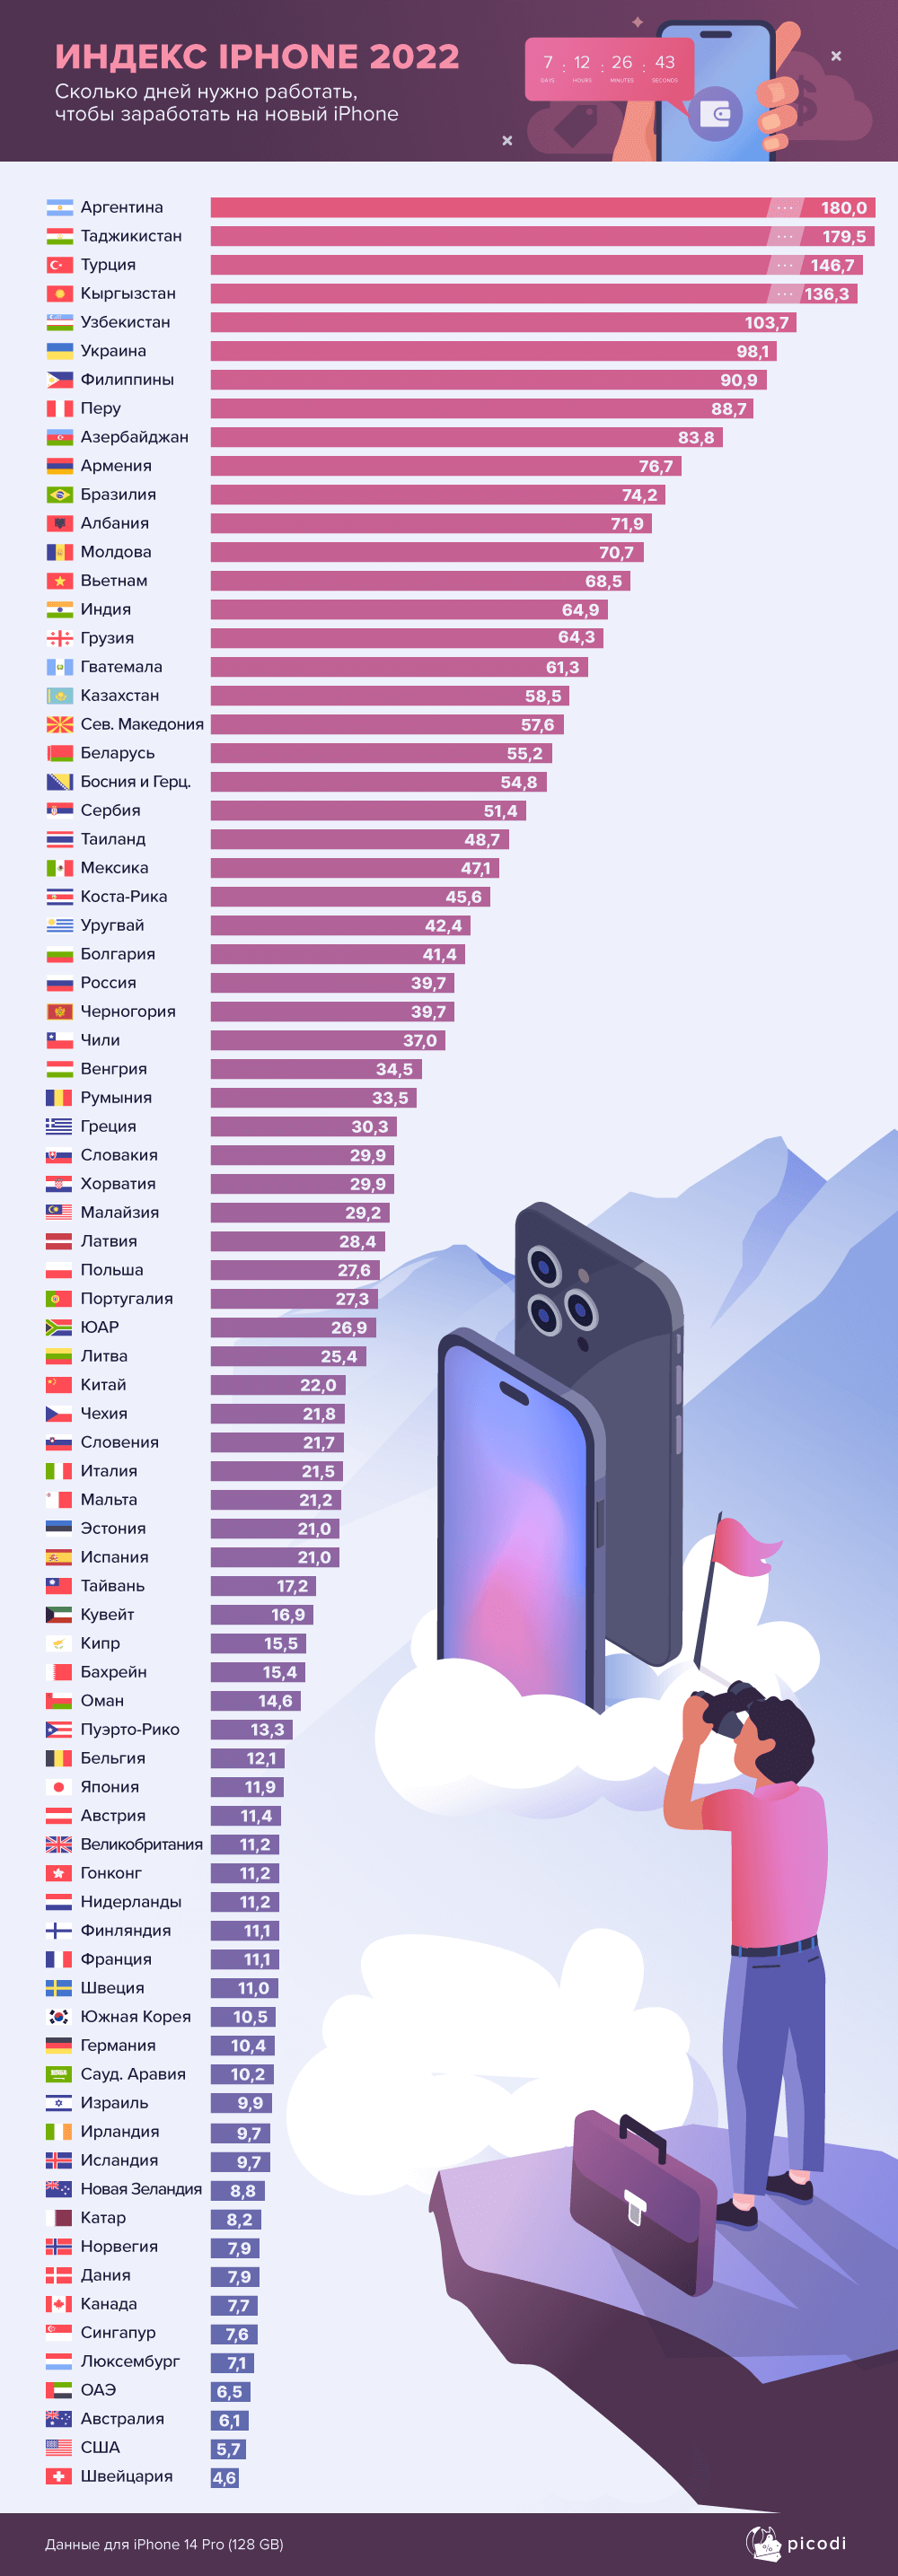 iphone-index-2022-by-kavkaz-i-aziya.png